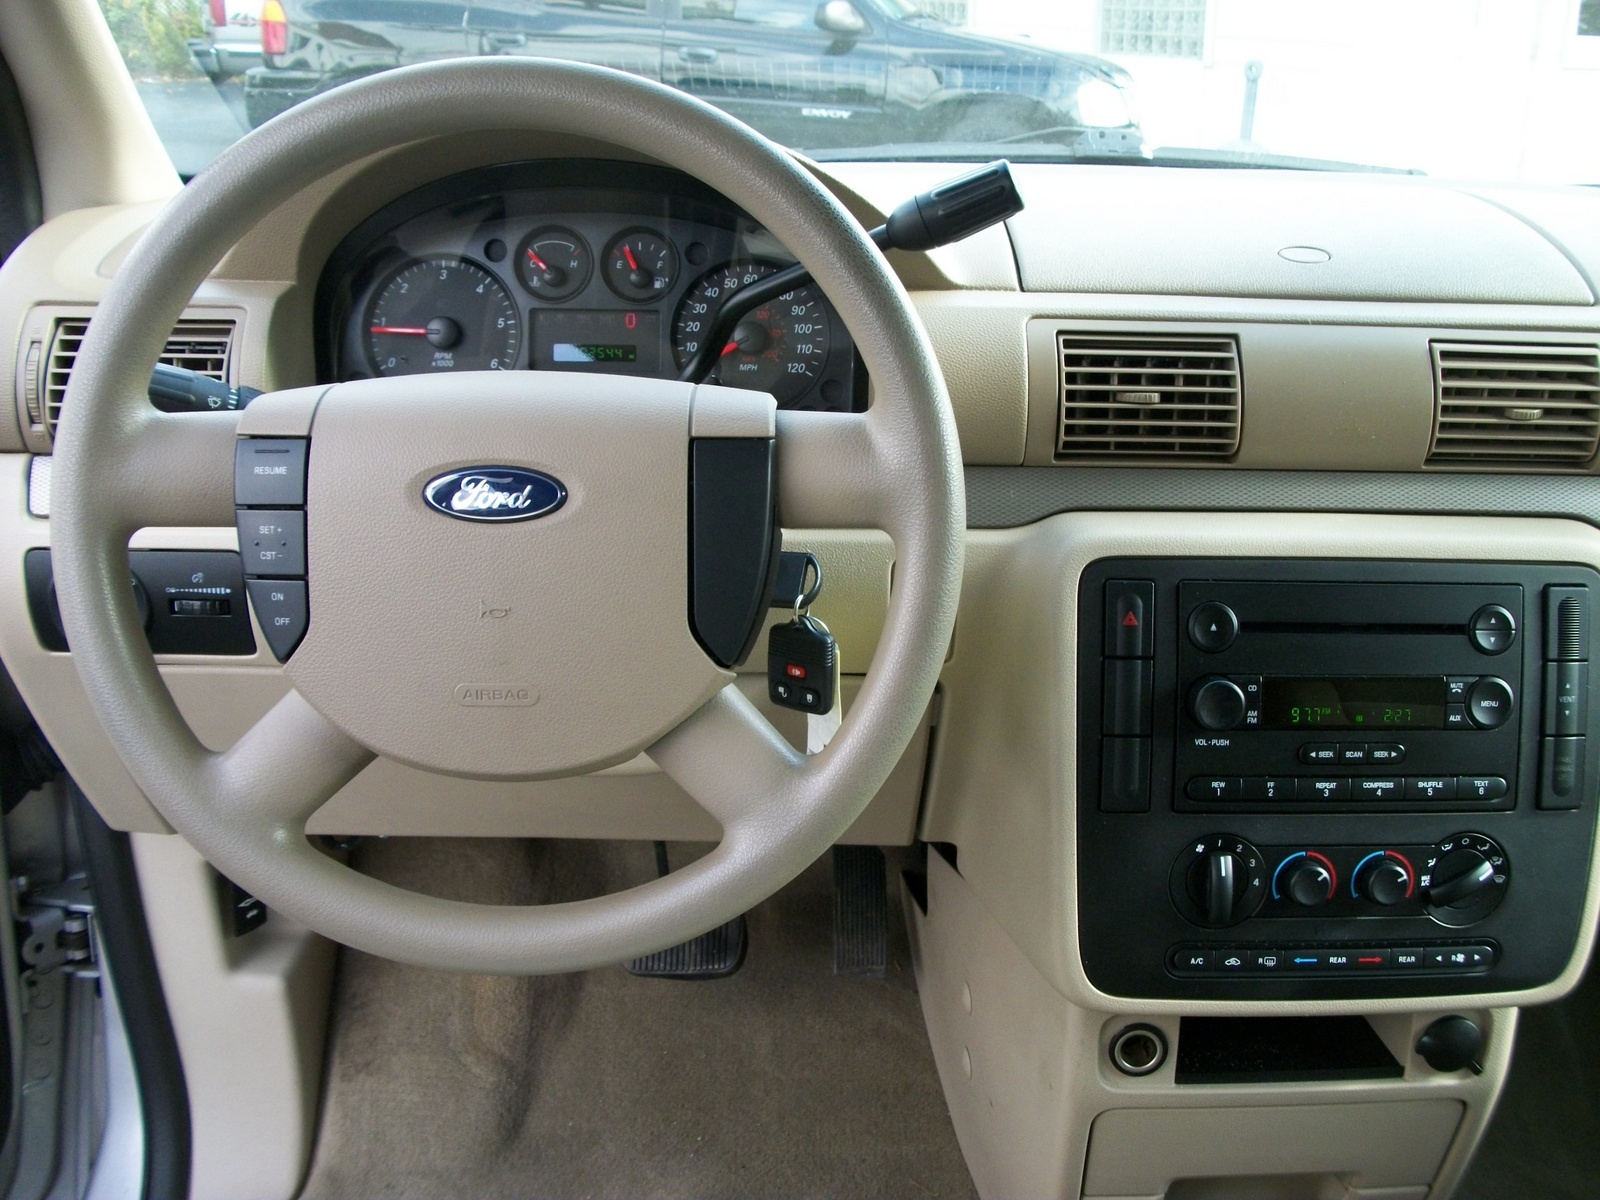 2007 Ford freestar advancetrac